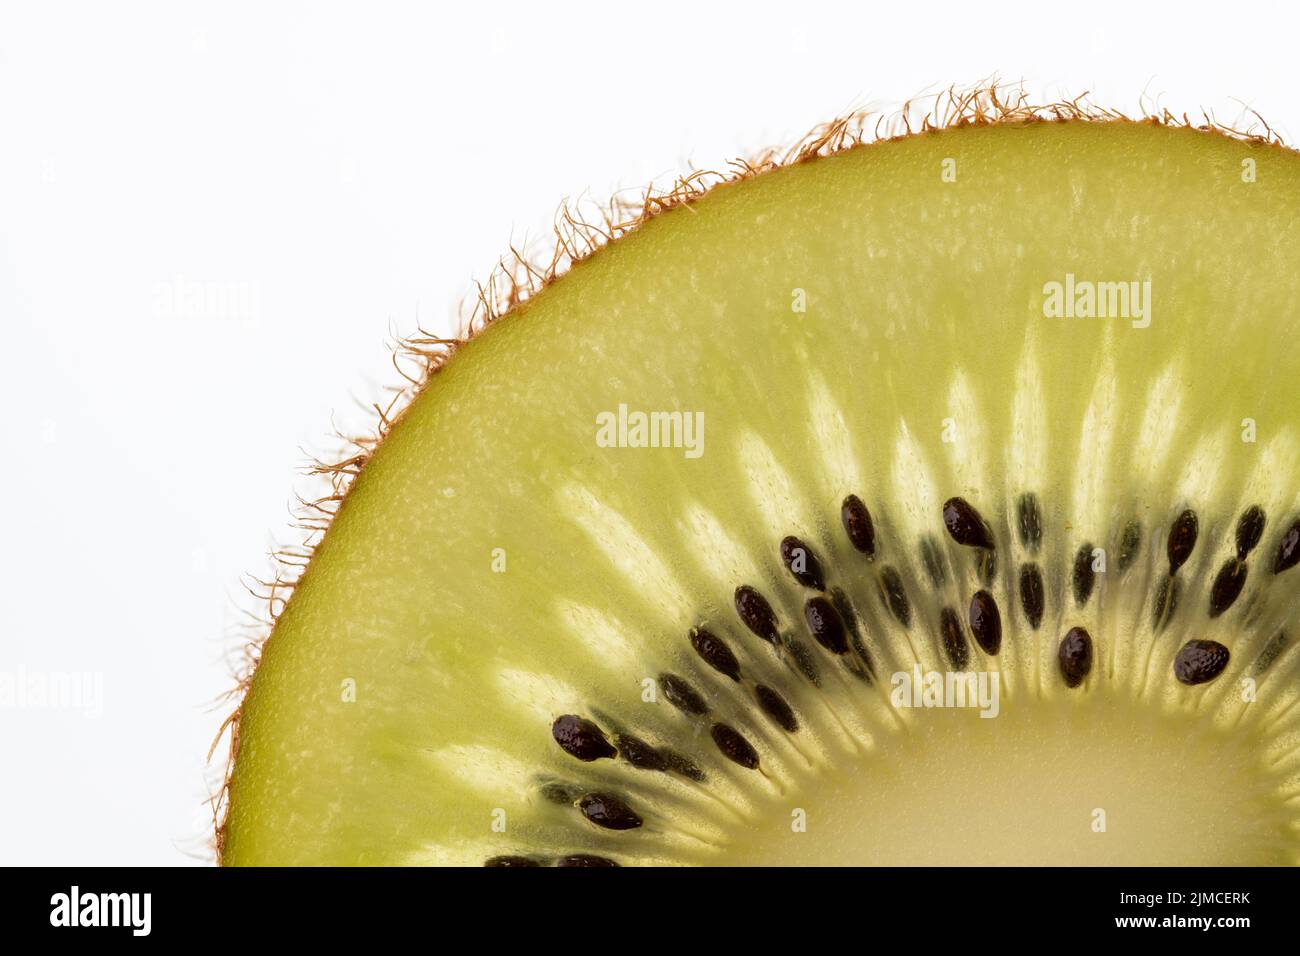 Part of a cut kiwi fruit in backlight foto shot Stock Photo